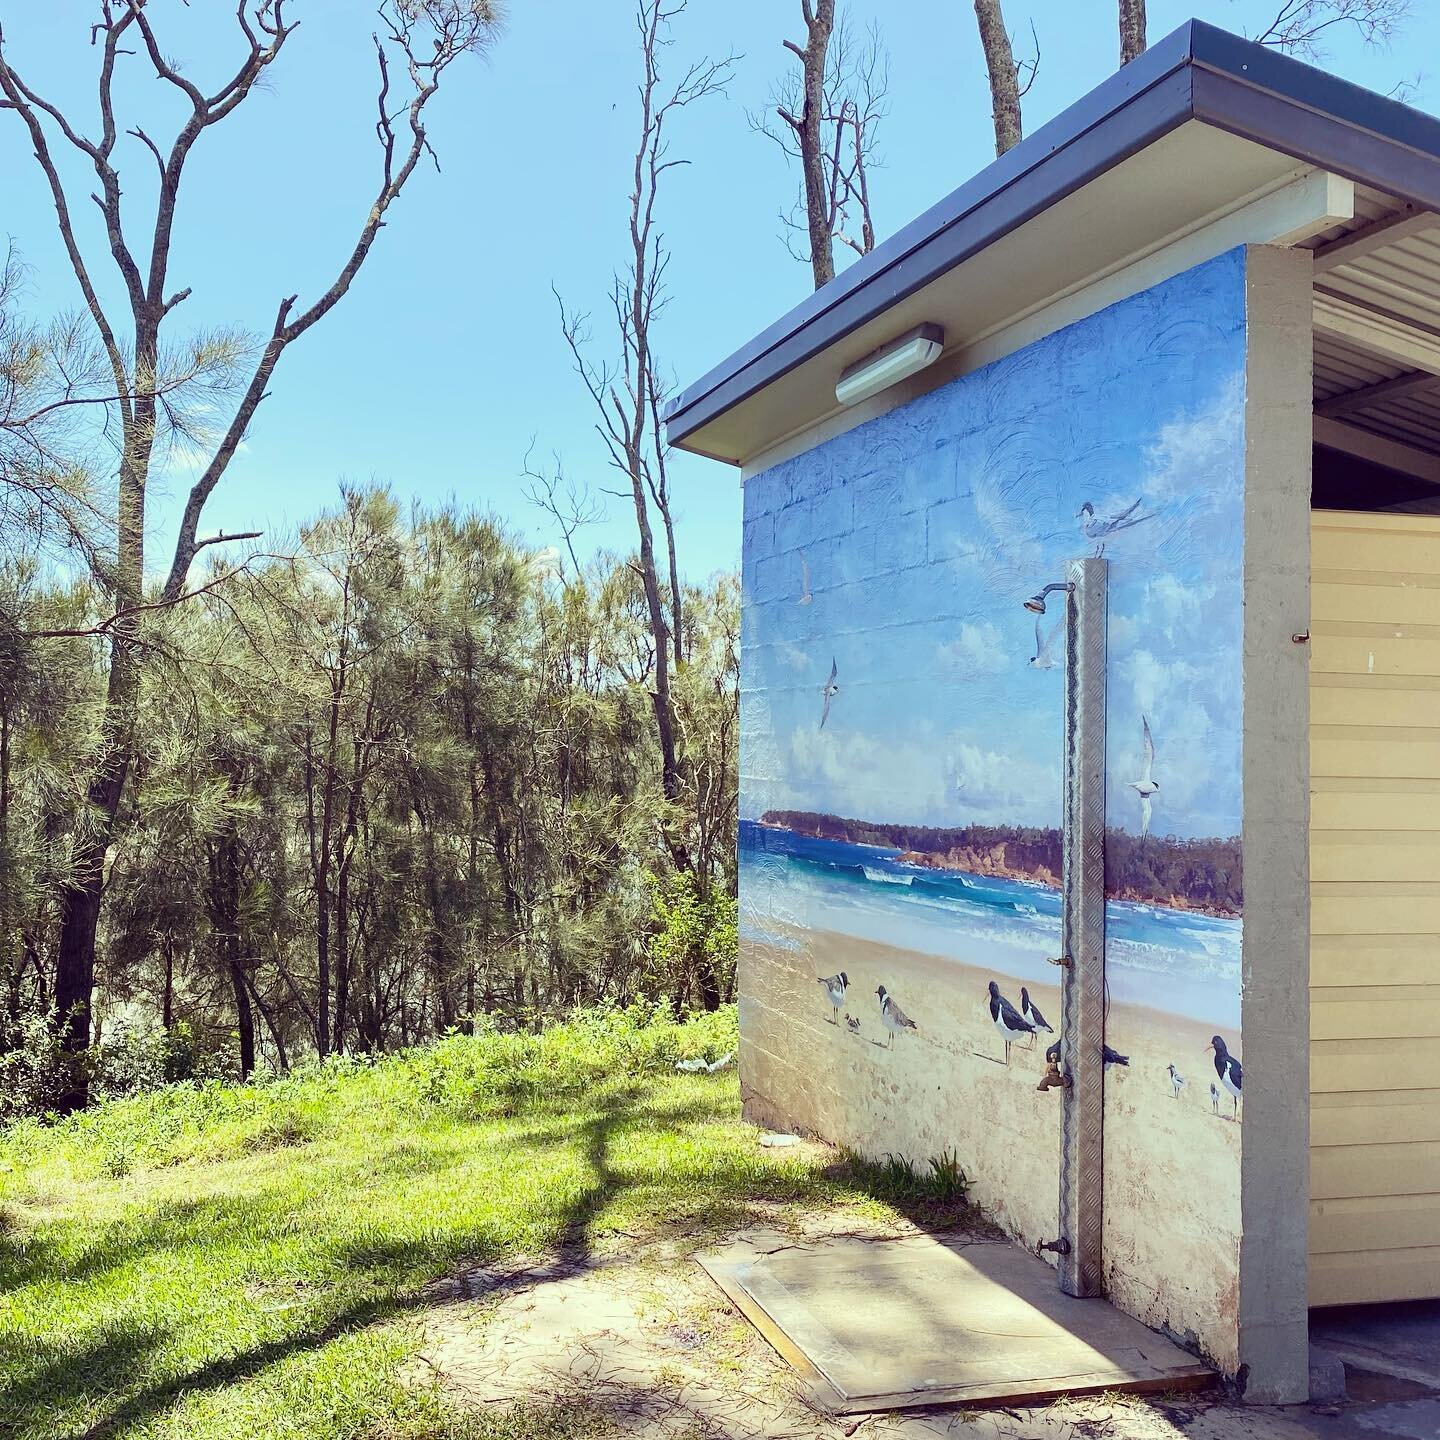 Art imitating life #art #australia #beach #caravanpark #coast #mural #outdoorshower #painting #southcoast #streetart